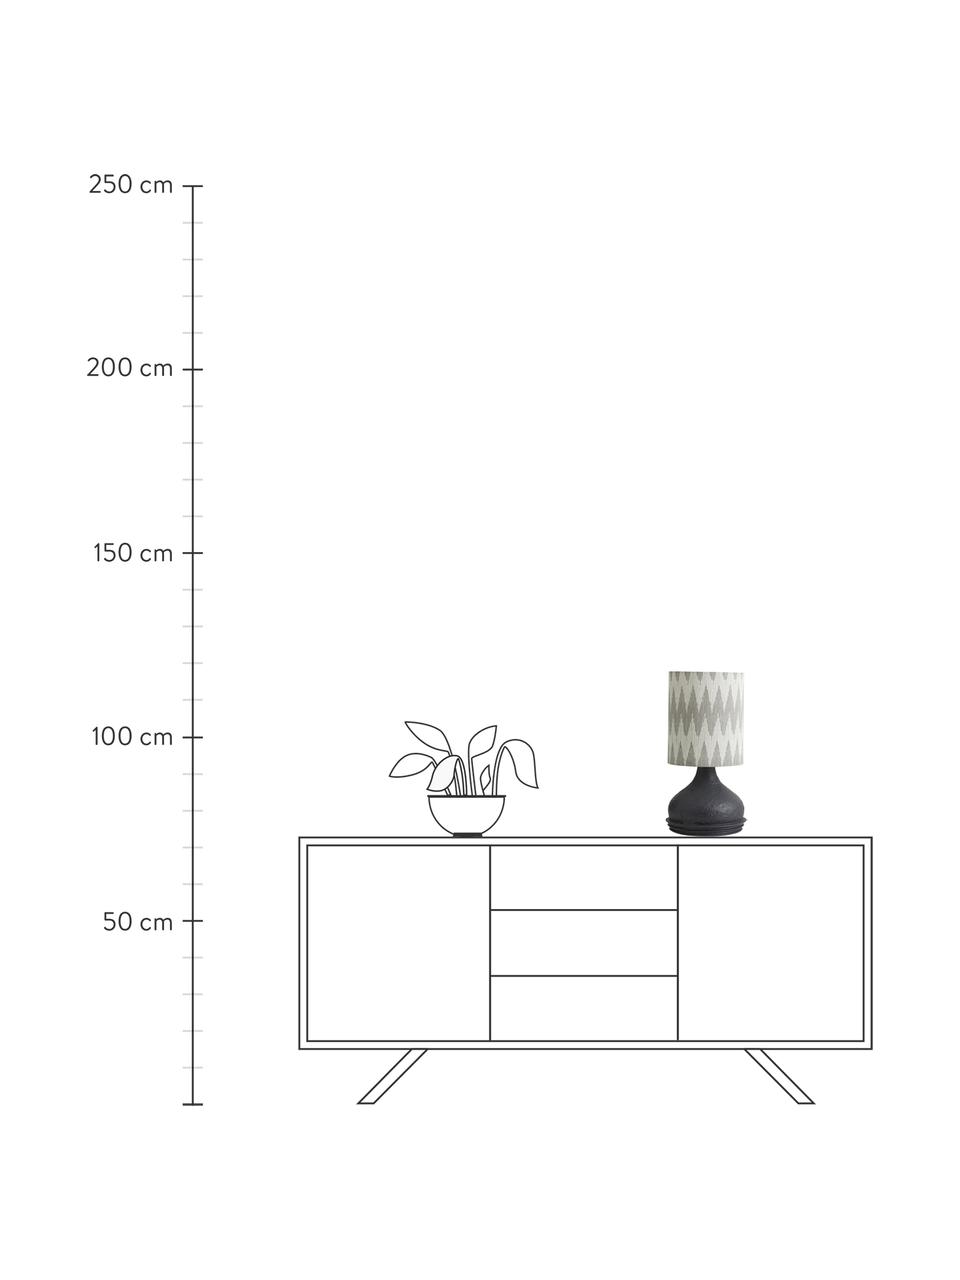 Tafellamp Arito, Lampenkap: stof, Lampvoet: gecoat metaal, Zwart, grijs, wit, Ø 22 x H 45 cm